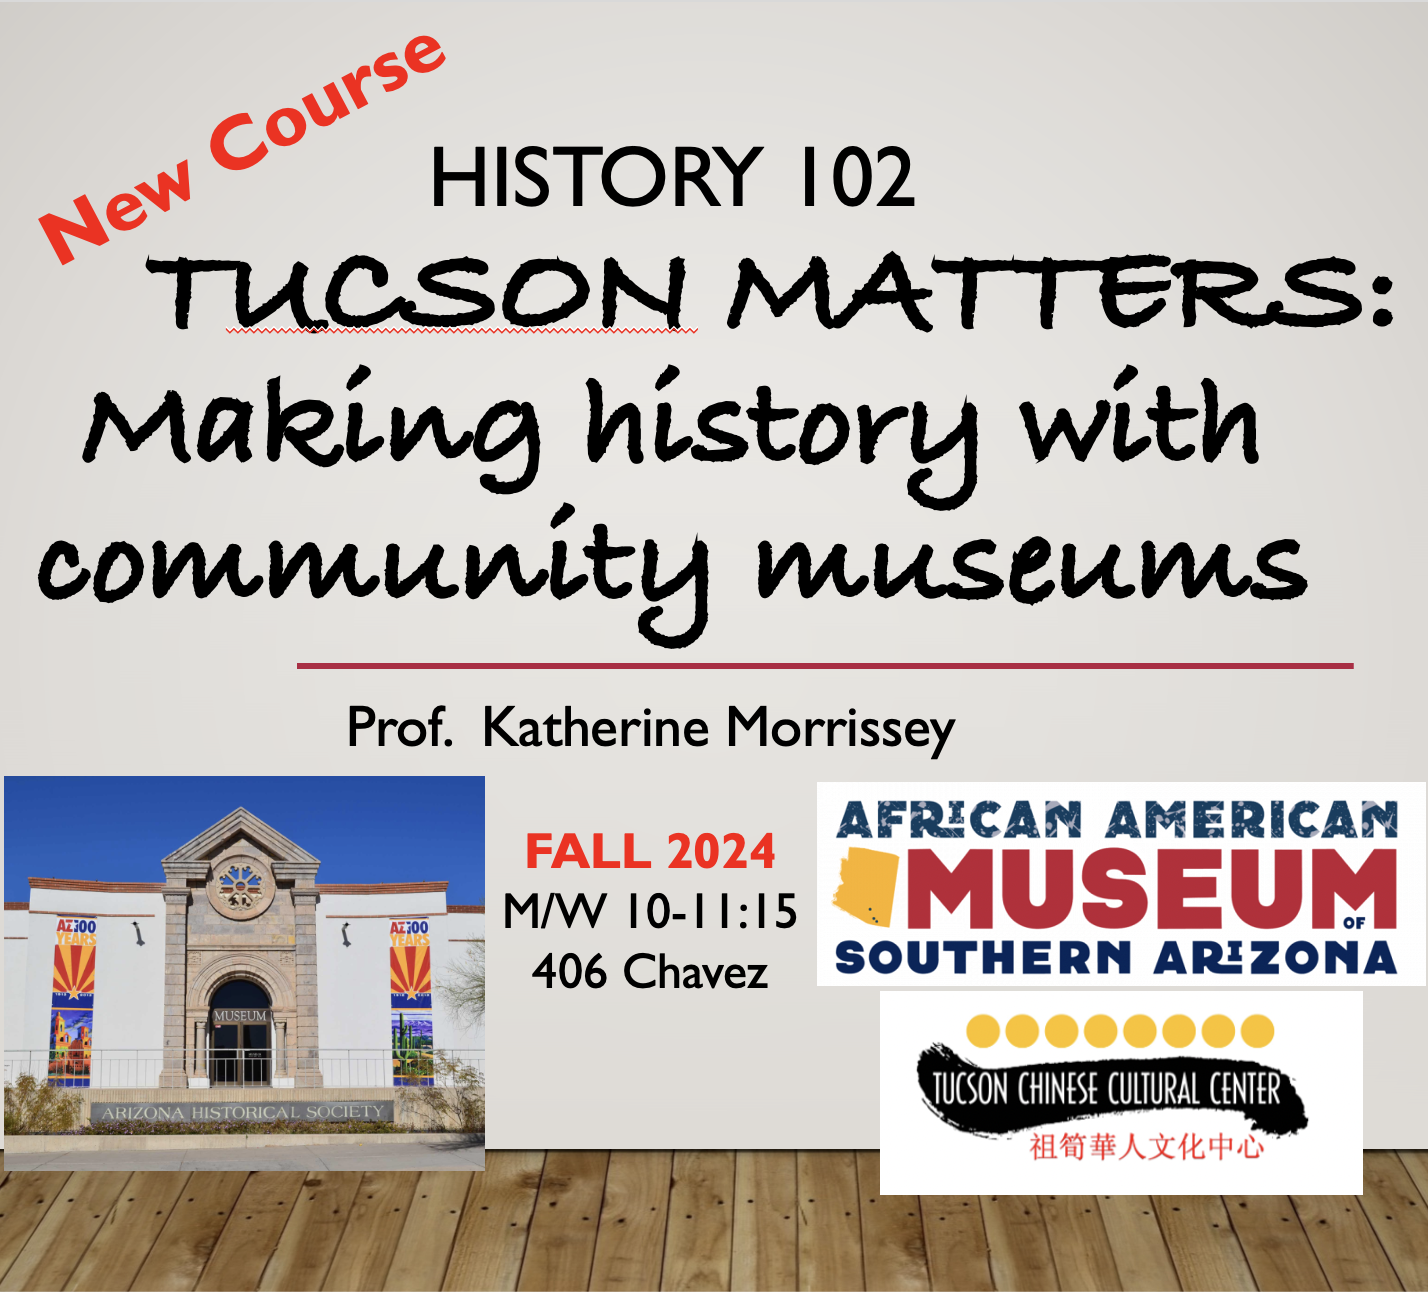 Tucson Matters flyer